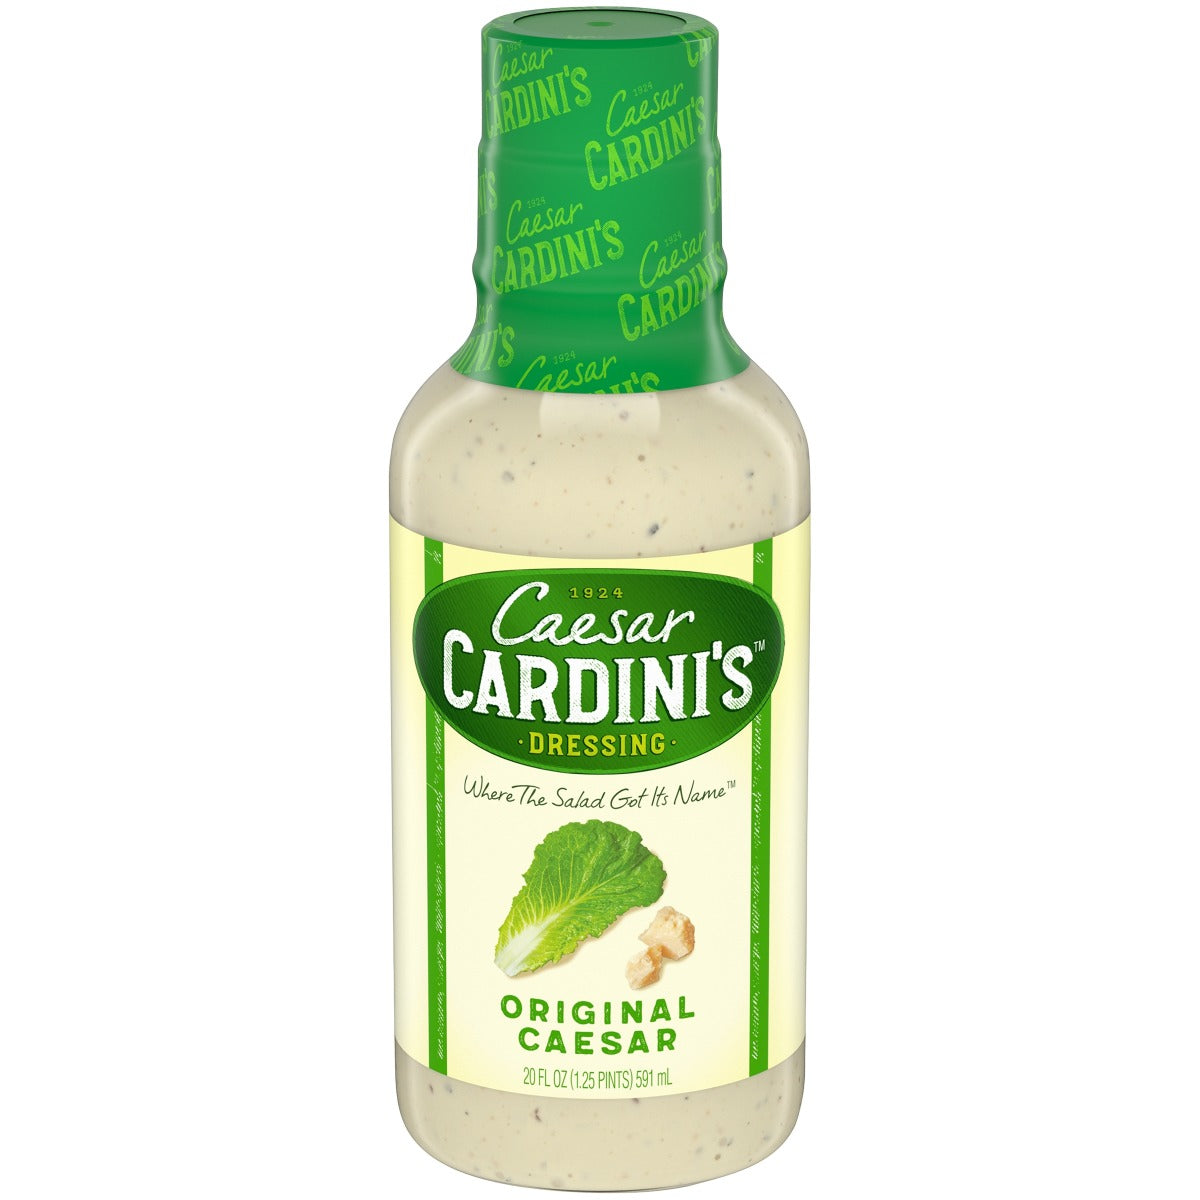 CARDINI: The Original Caesar Dressing, 20 oz - Vending Business Solutions